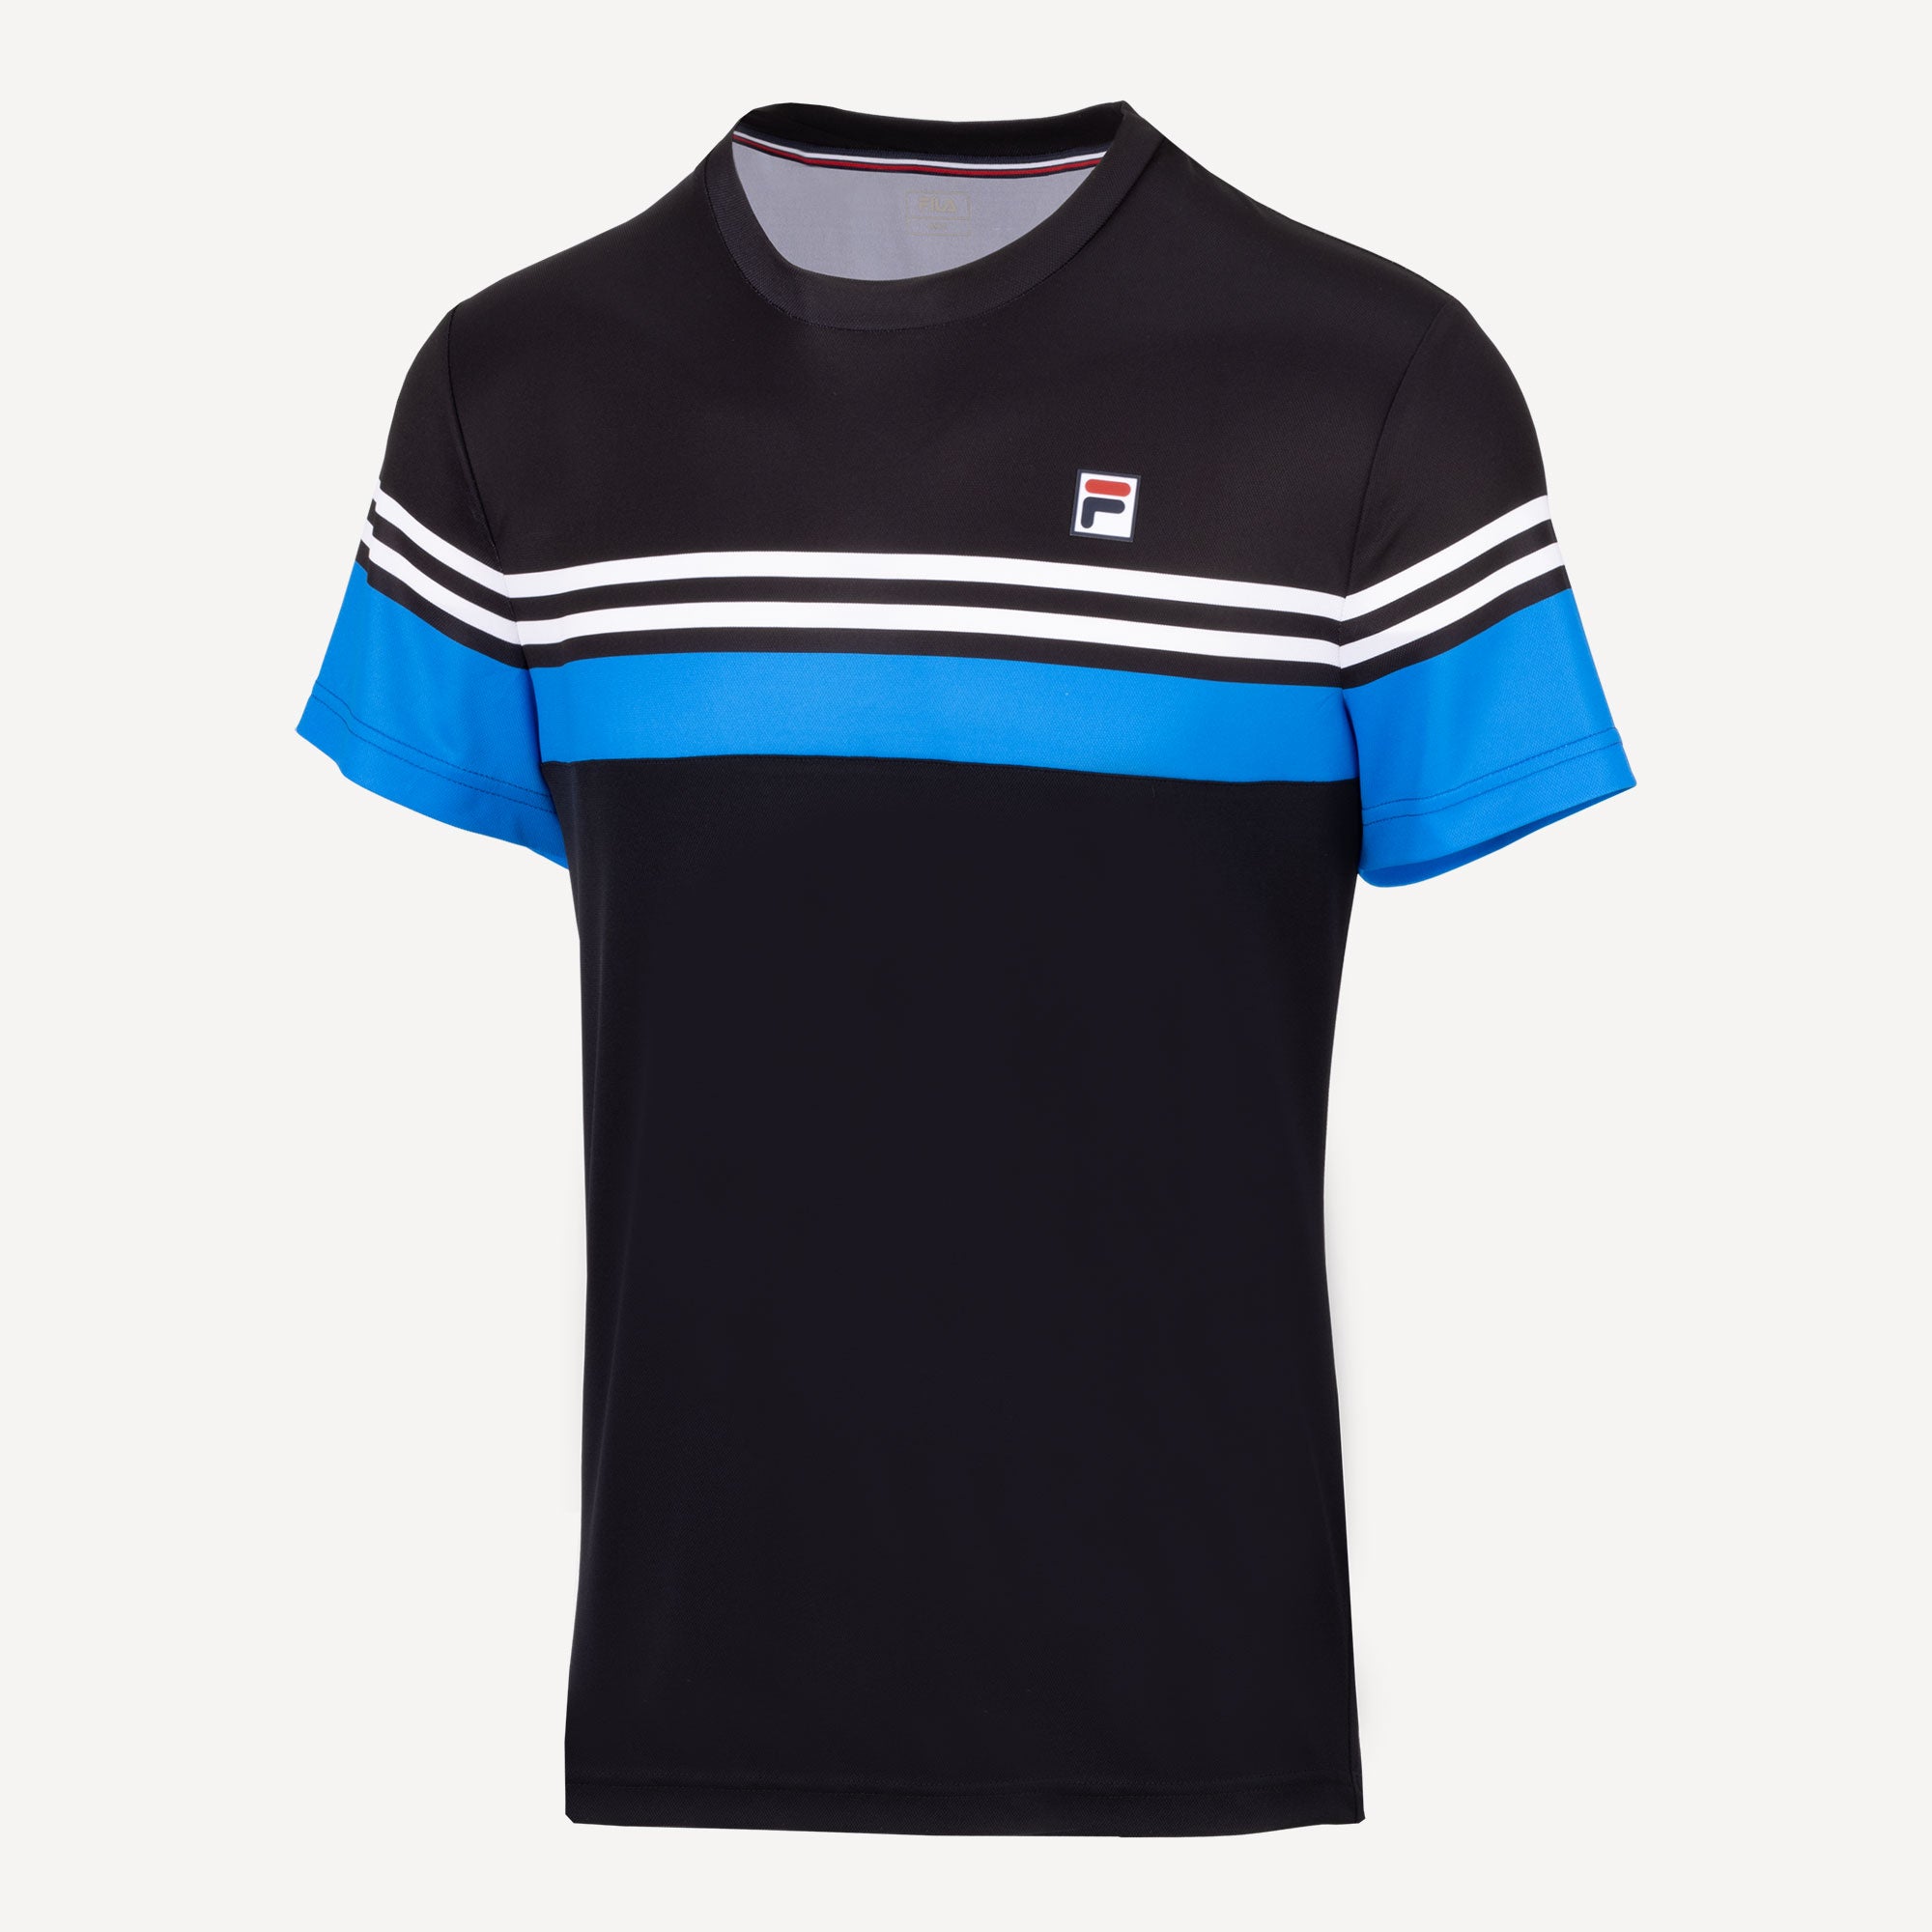 Fila Malte Men's Tennis Shirt Black (1)